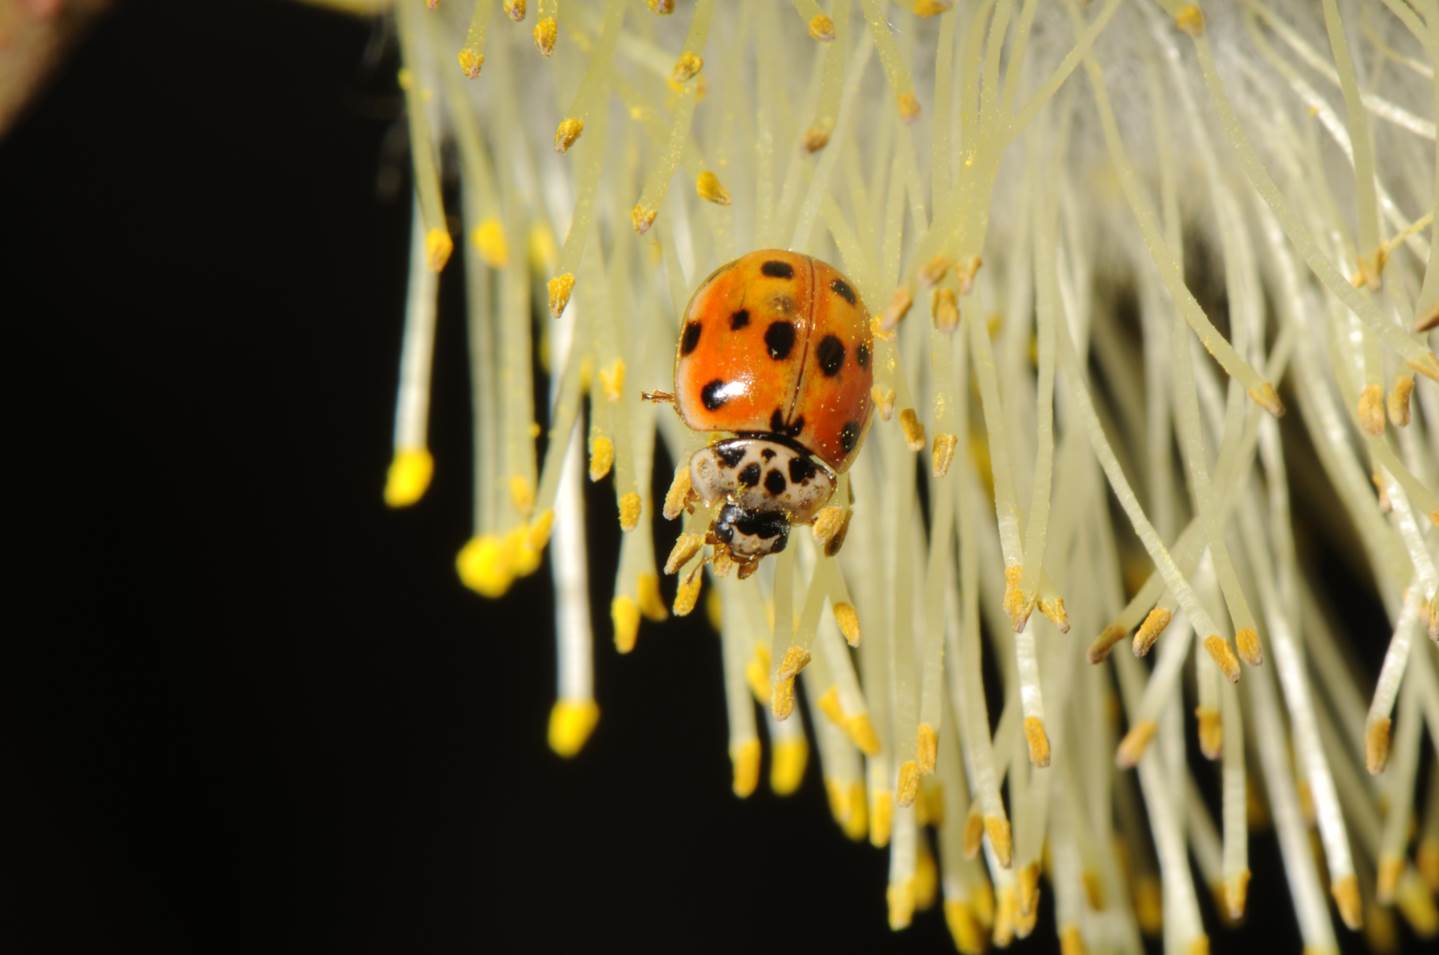 A ladybug on a flower

Description automatically generated